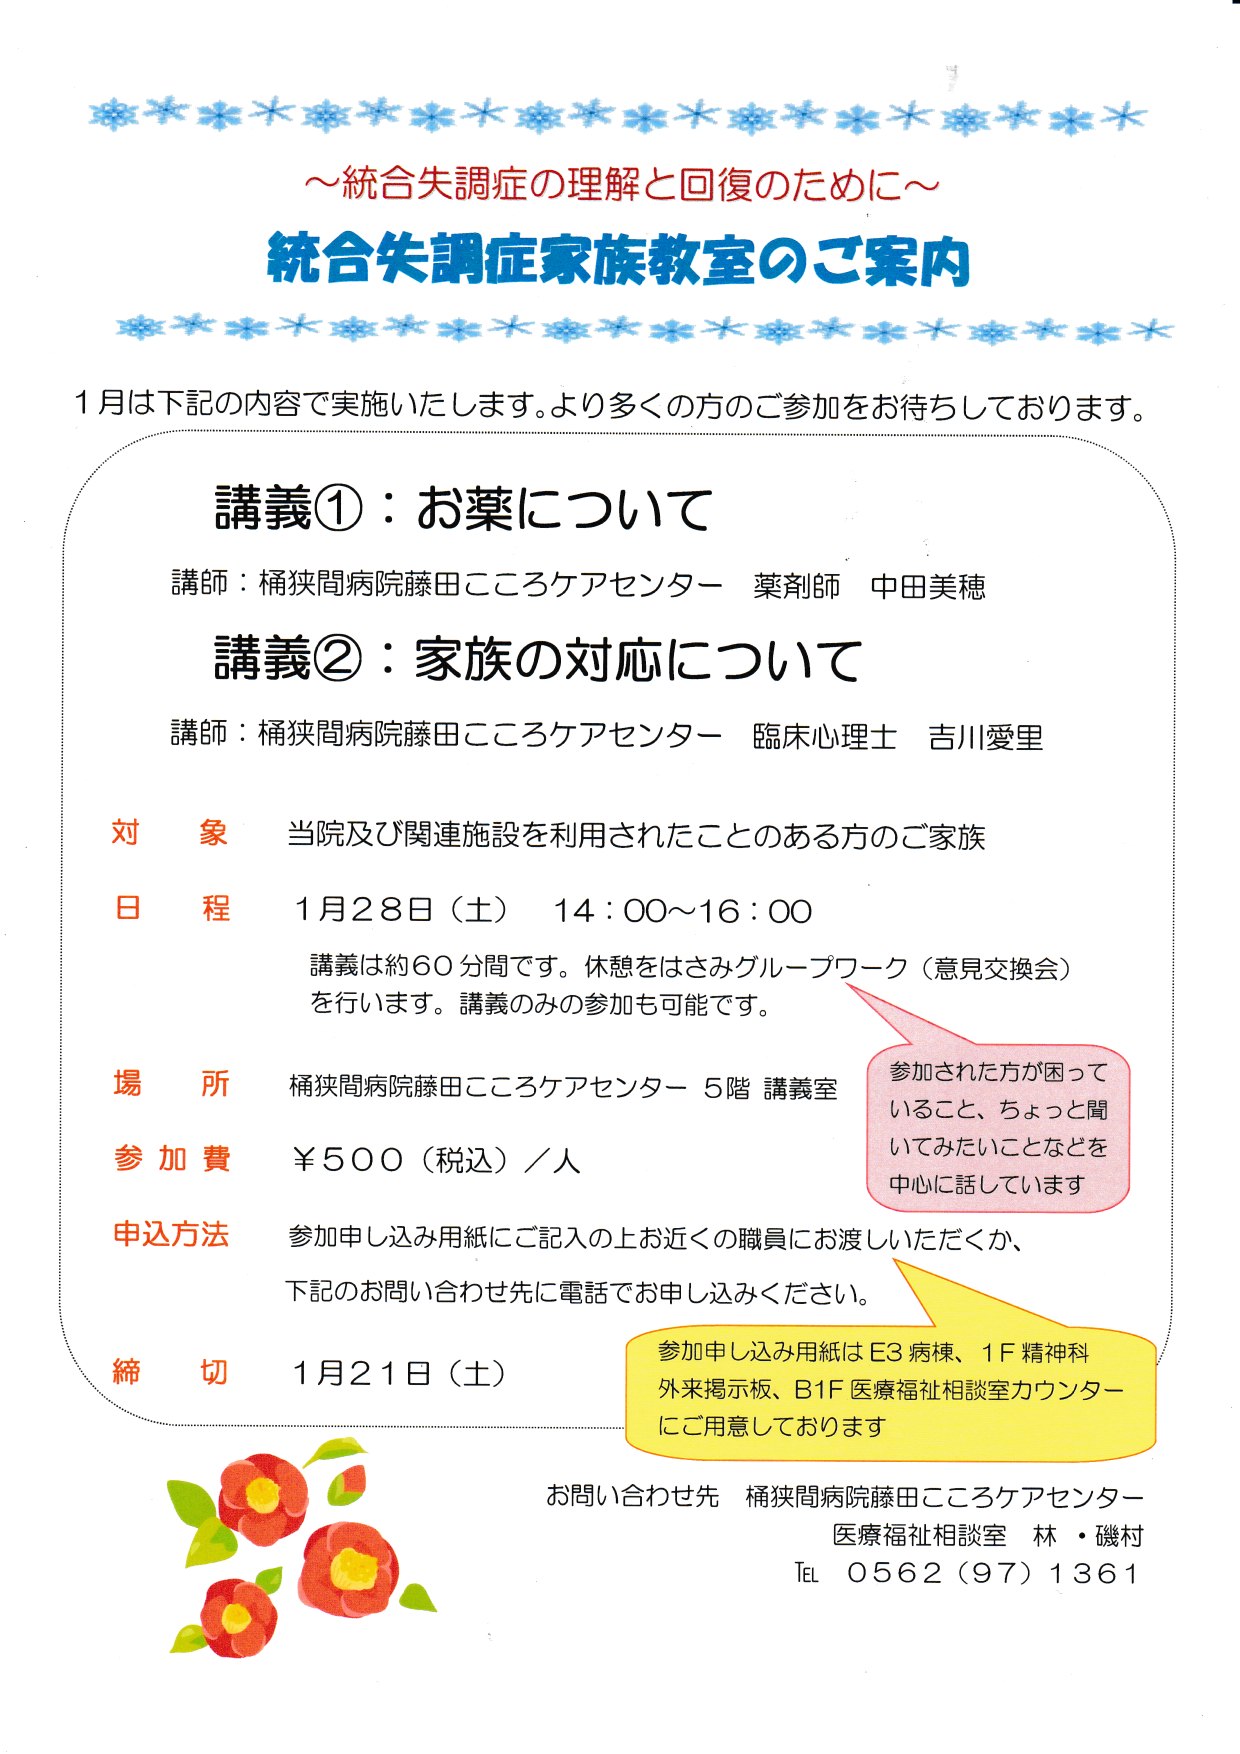 http://www.seishinkai-kokoro.jp/news/S%E5%AE%B6%E6%97%8F%E6%95%99%E5%AE%A4201701.jpg